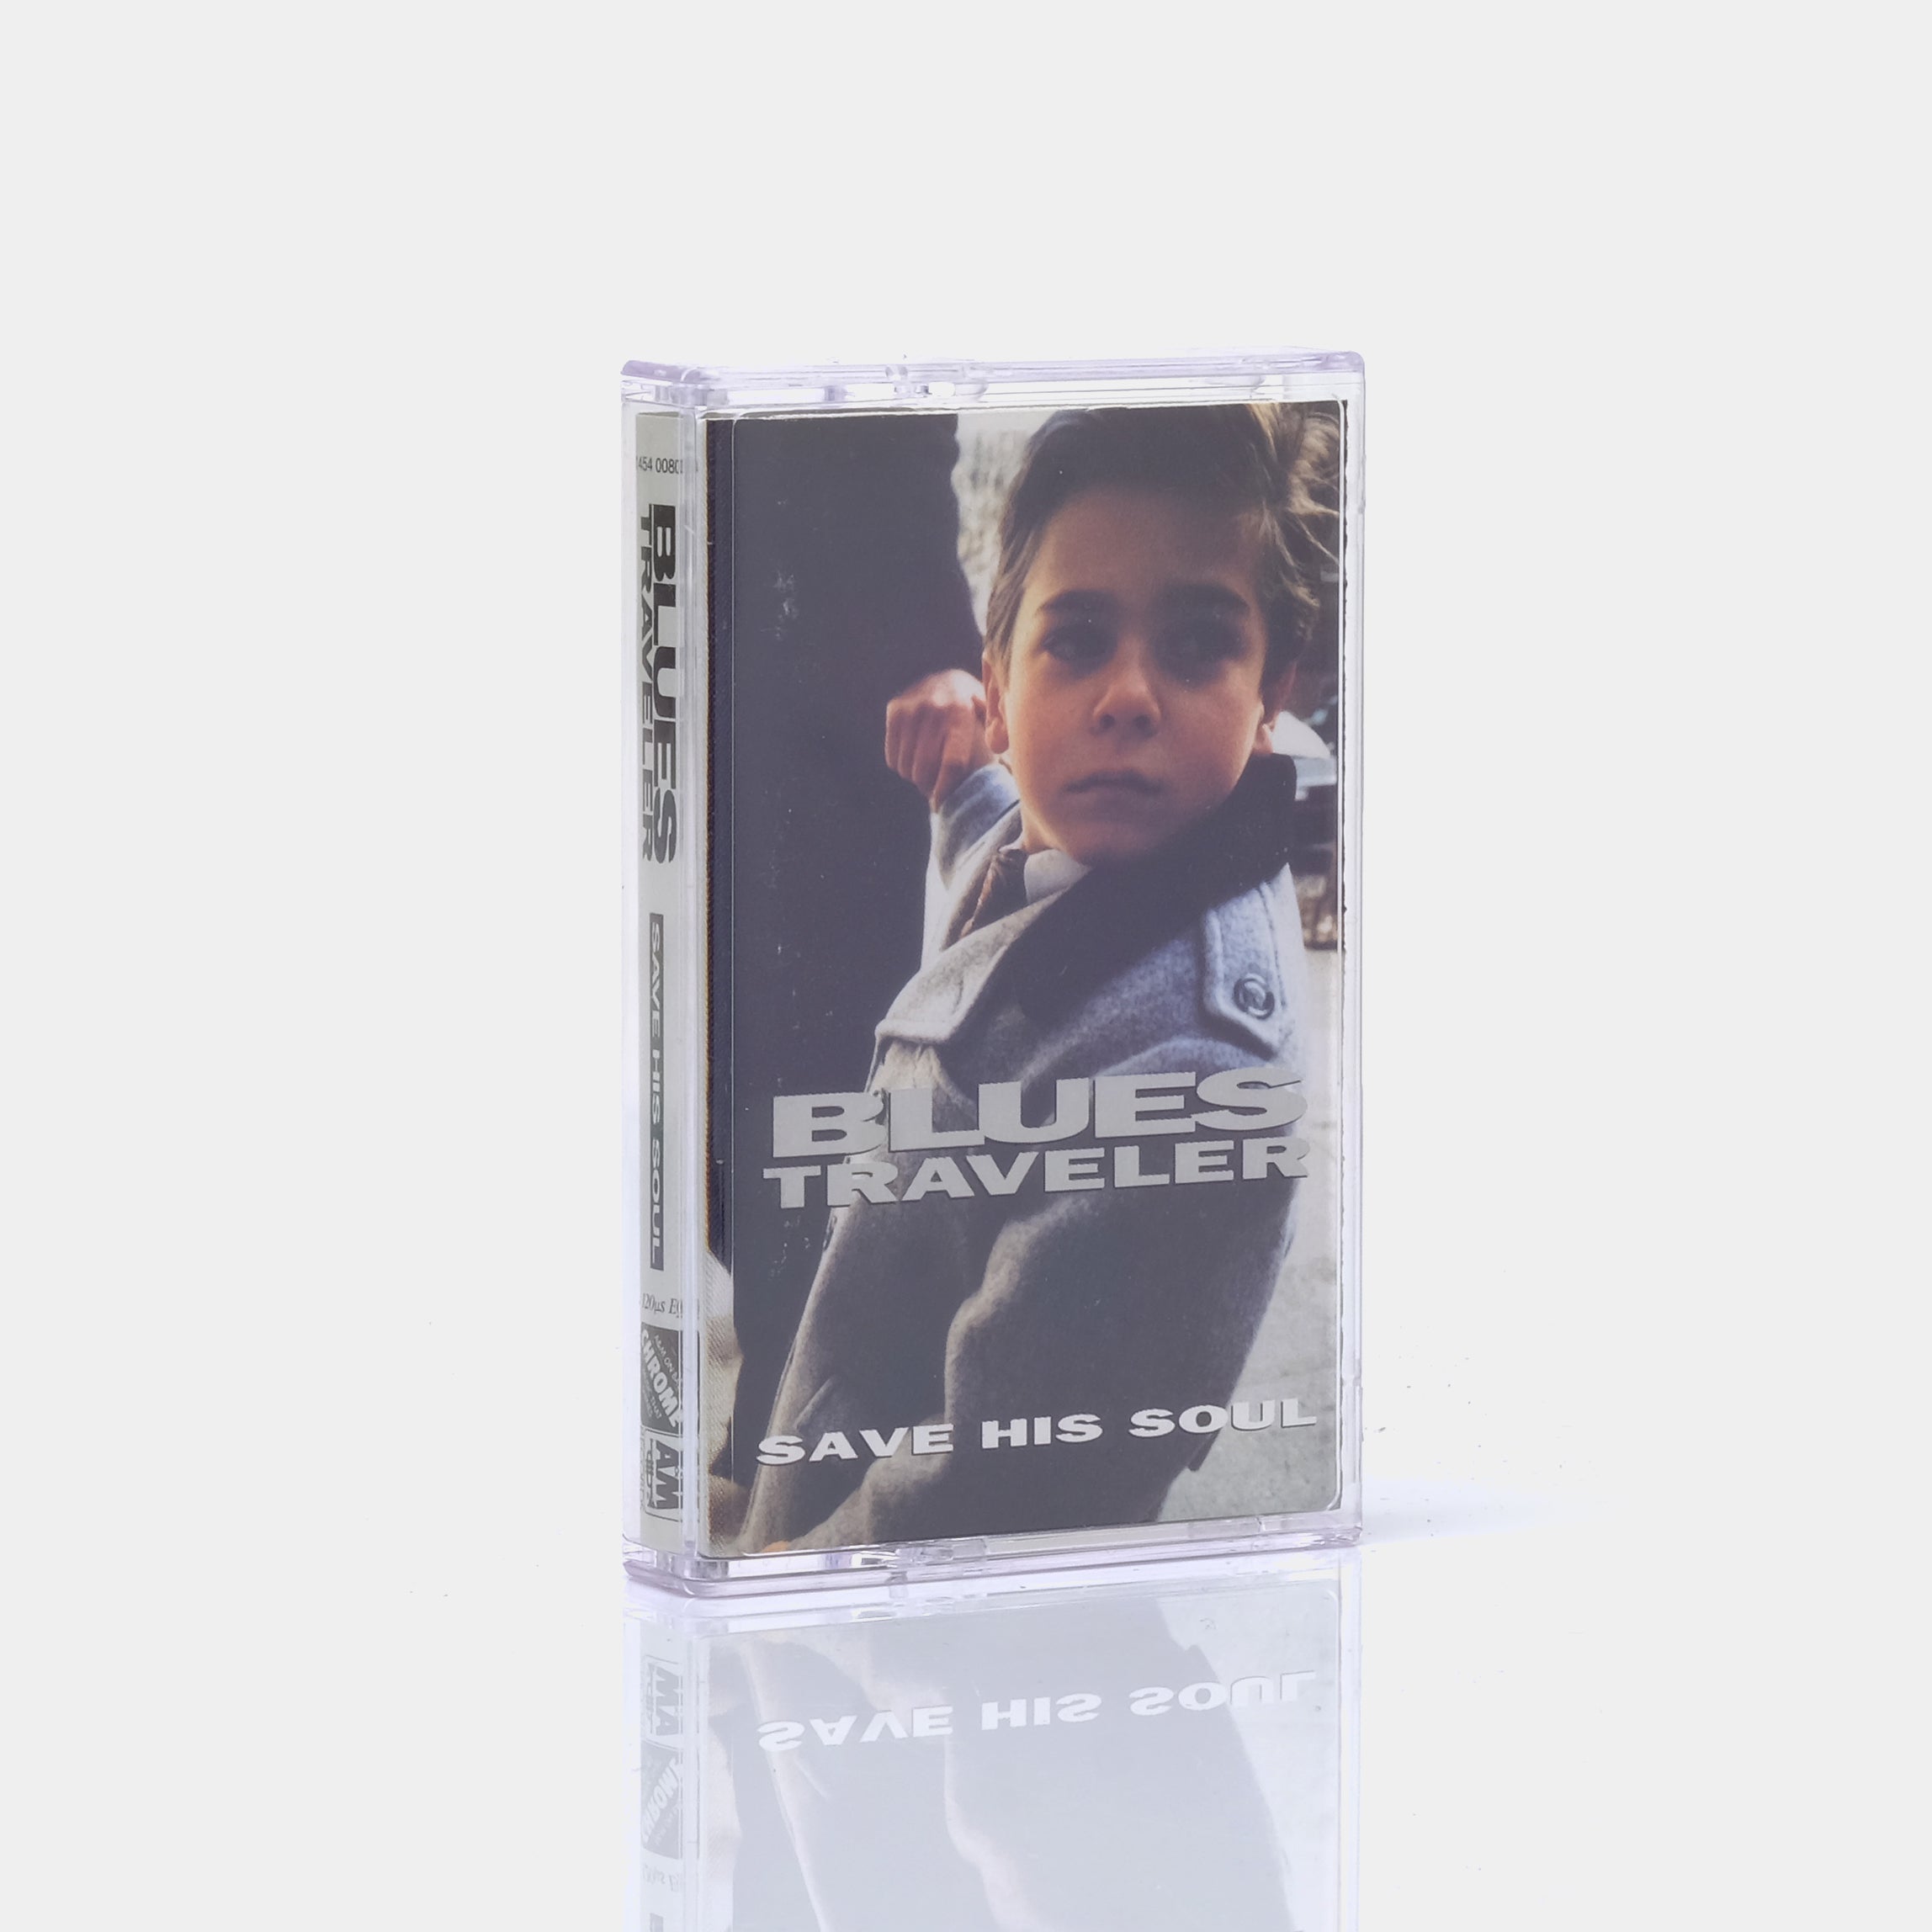 Blues Traveler - Save His Soul Cassette Tape